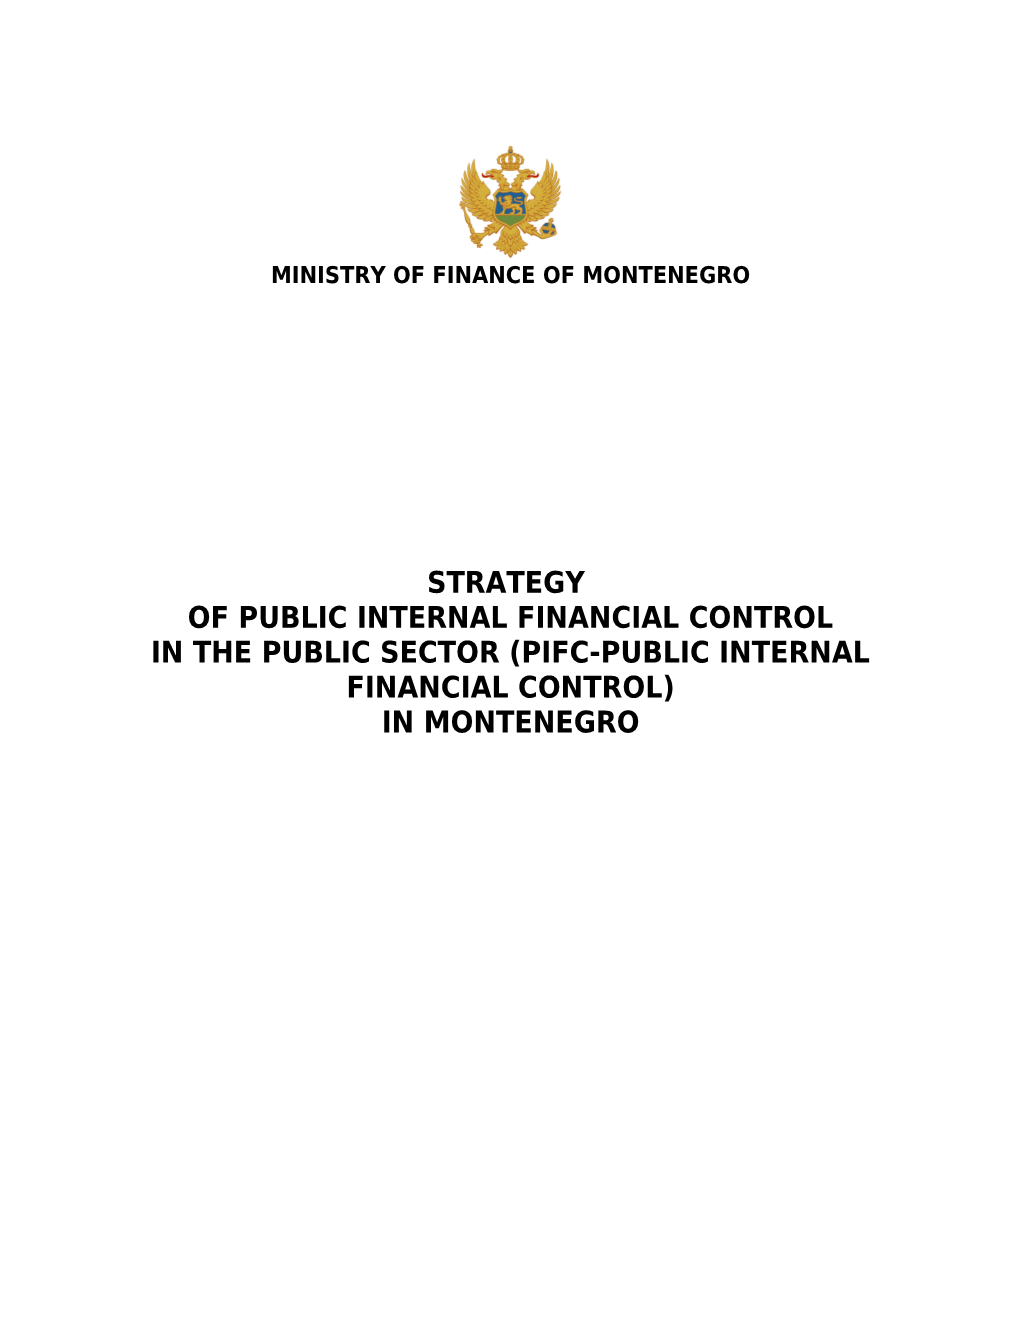 Of Public Internal Financial Control